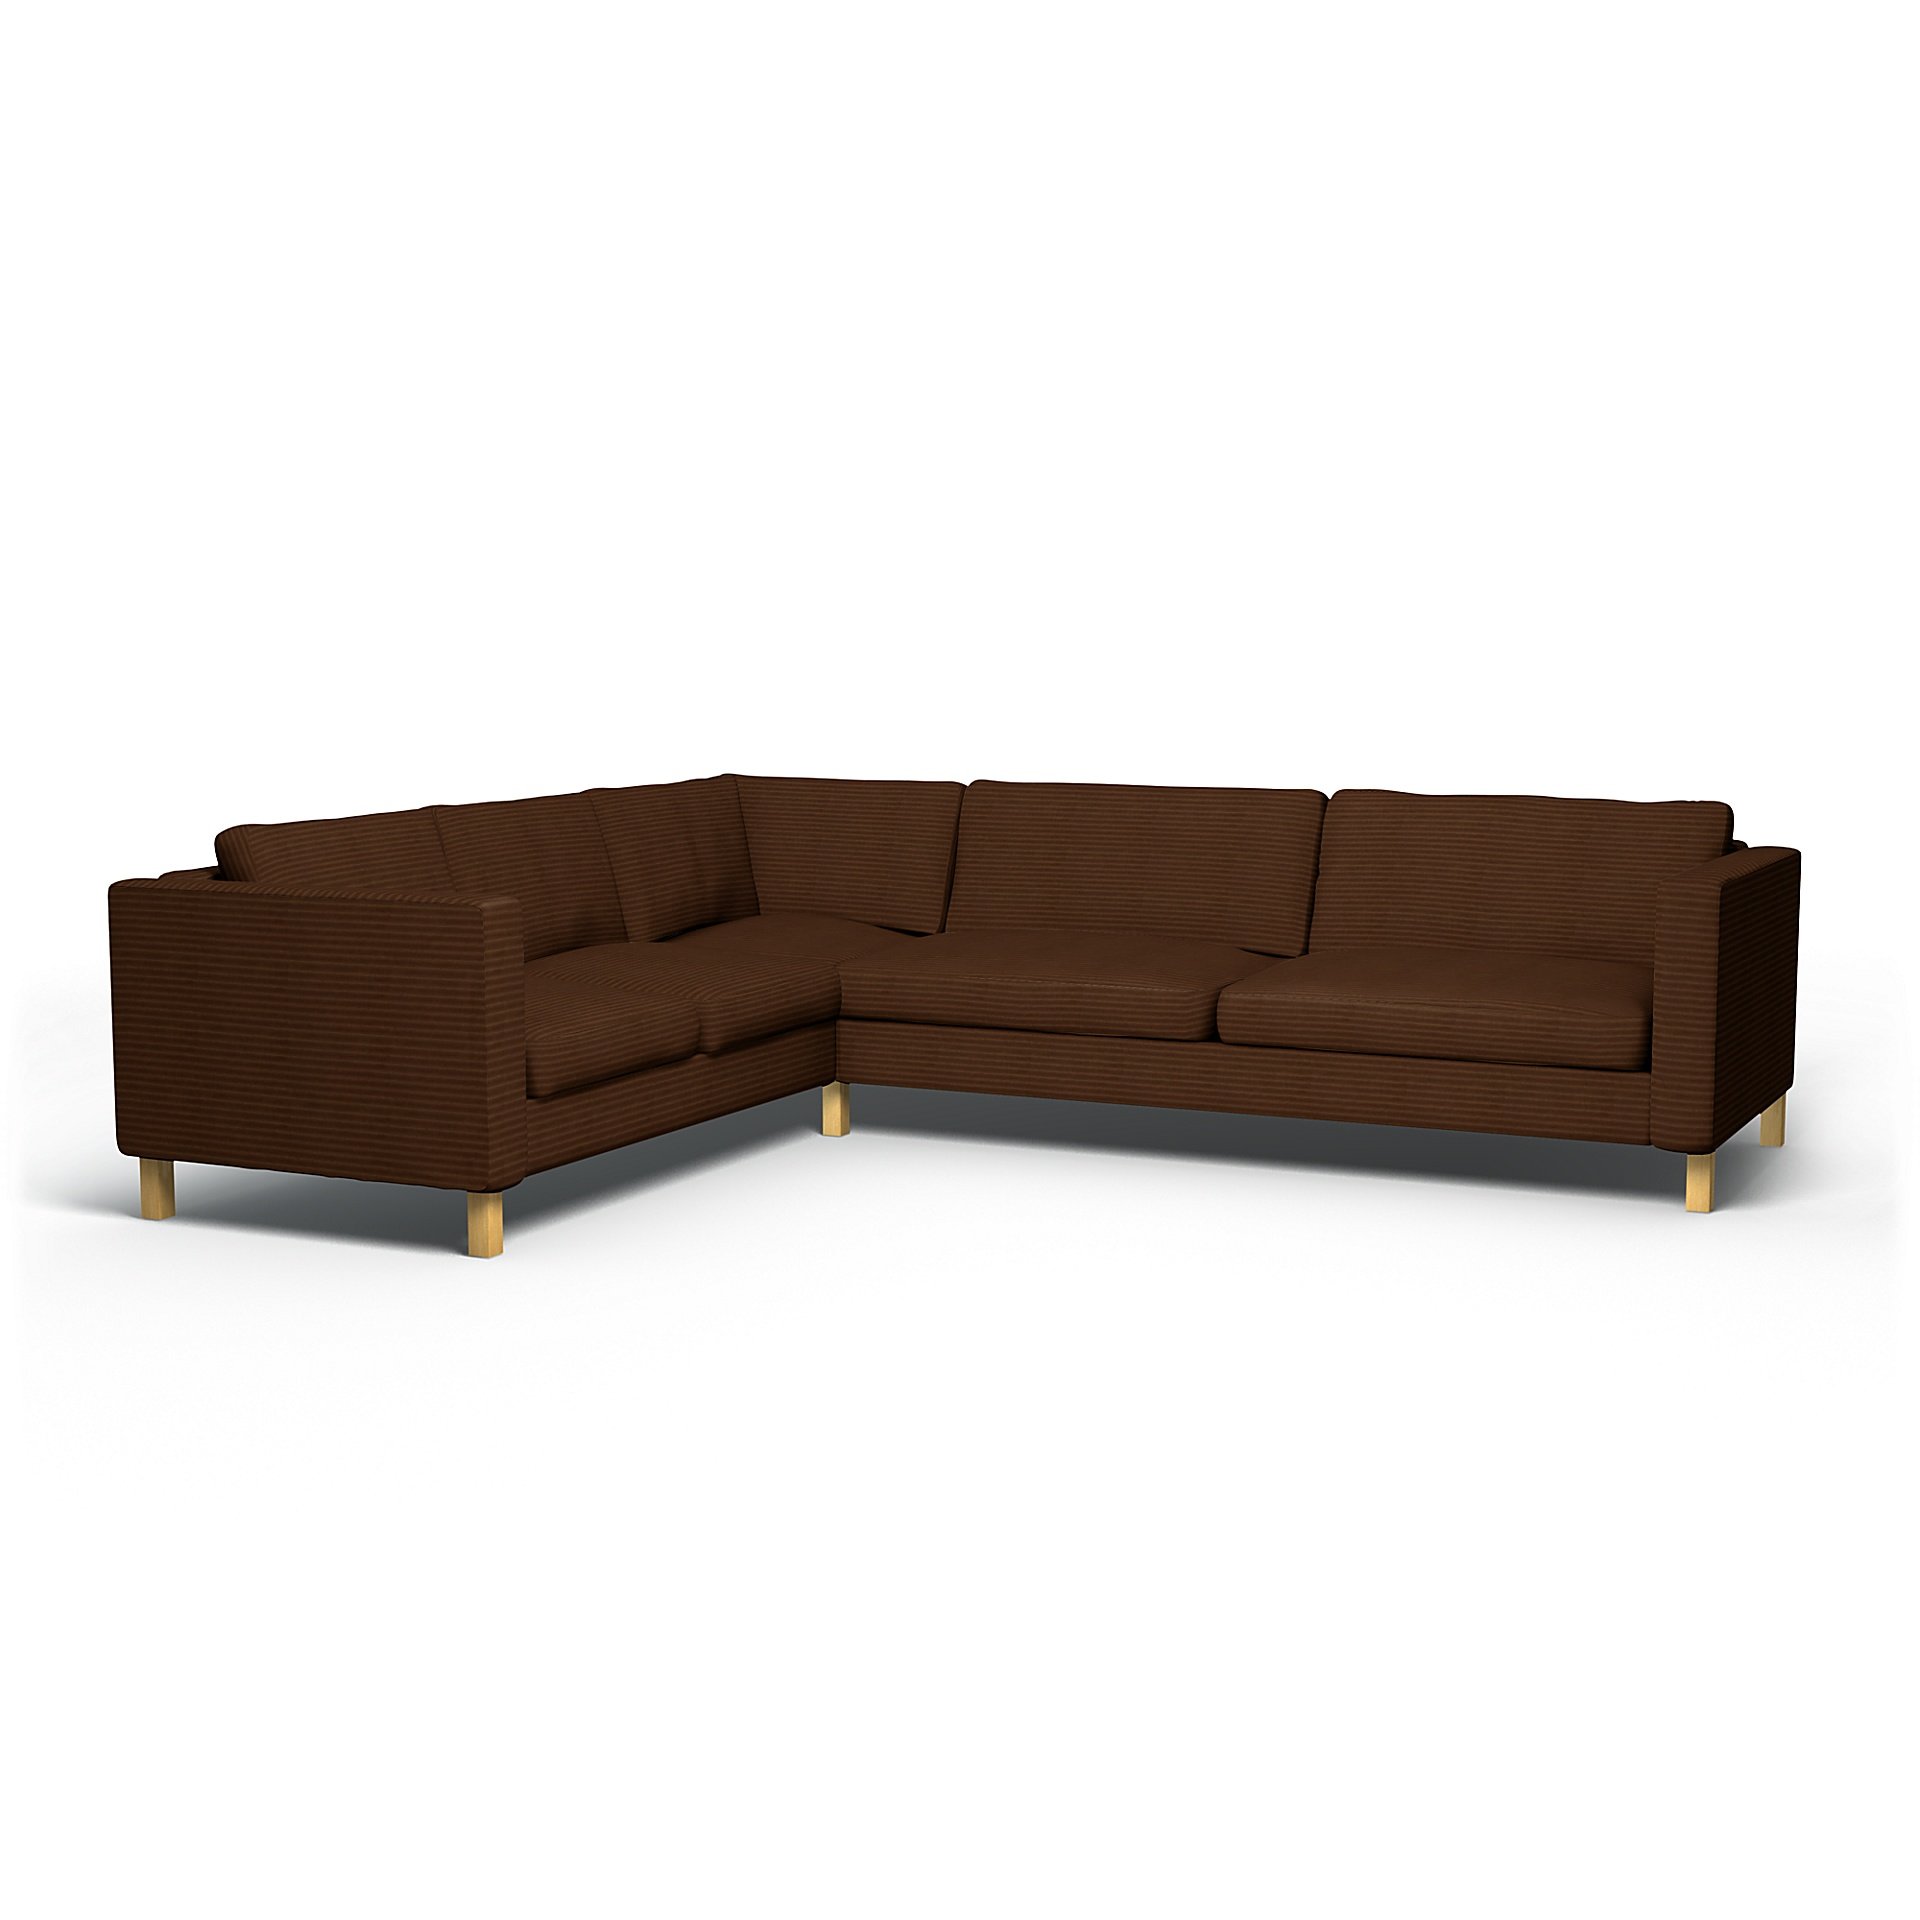 IKEA - Karlstad Corner Sofa Cover (2+3), Chocolate Brown, Corduroy - Bemz